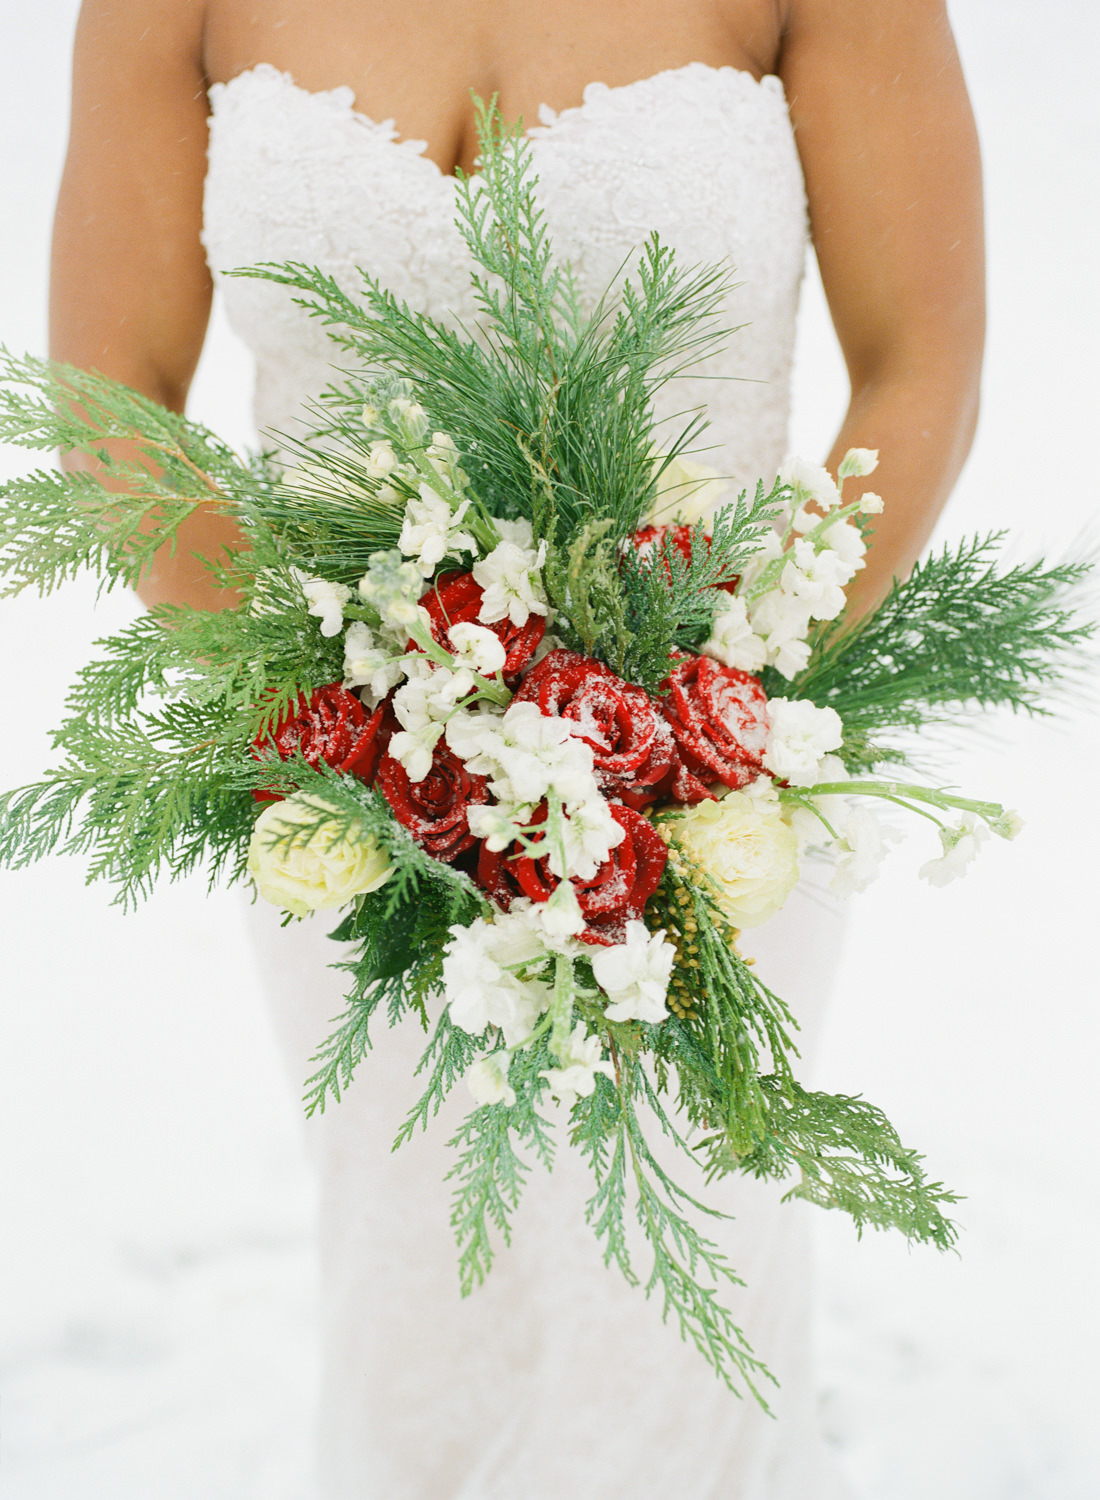 Winter Winter wedding, red rose and spruce Christmas bridal bouquet; St. Louis fine art film wedding photographer Erica Robnett Photography